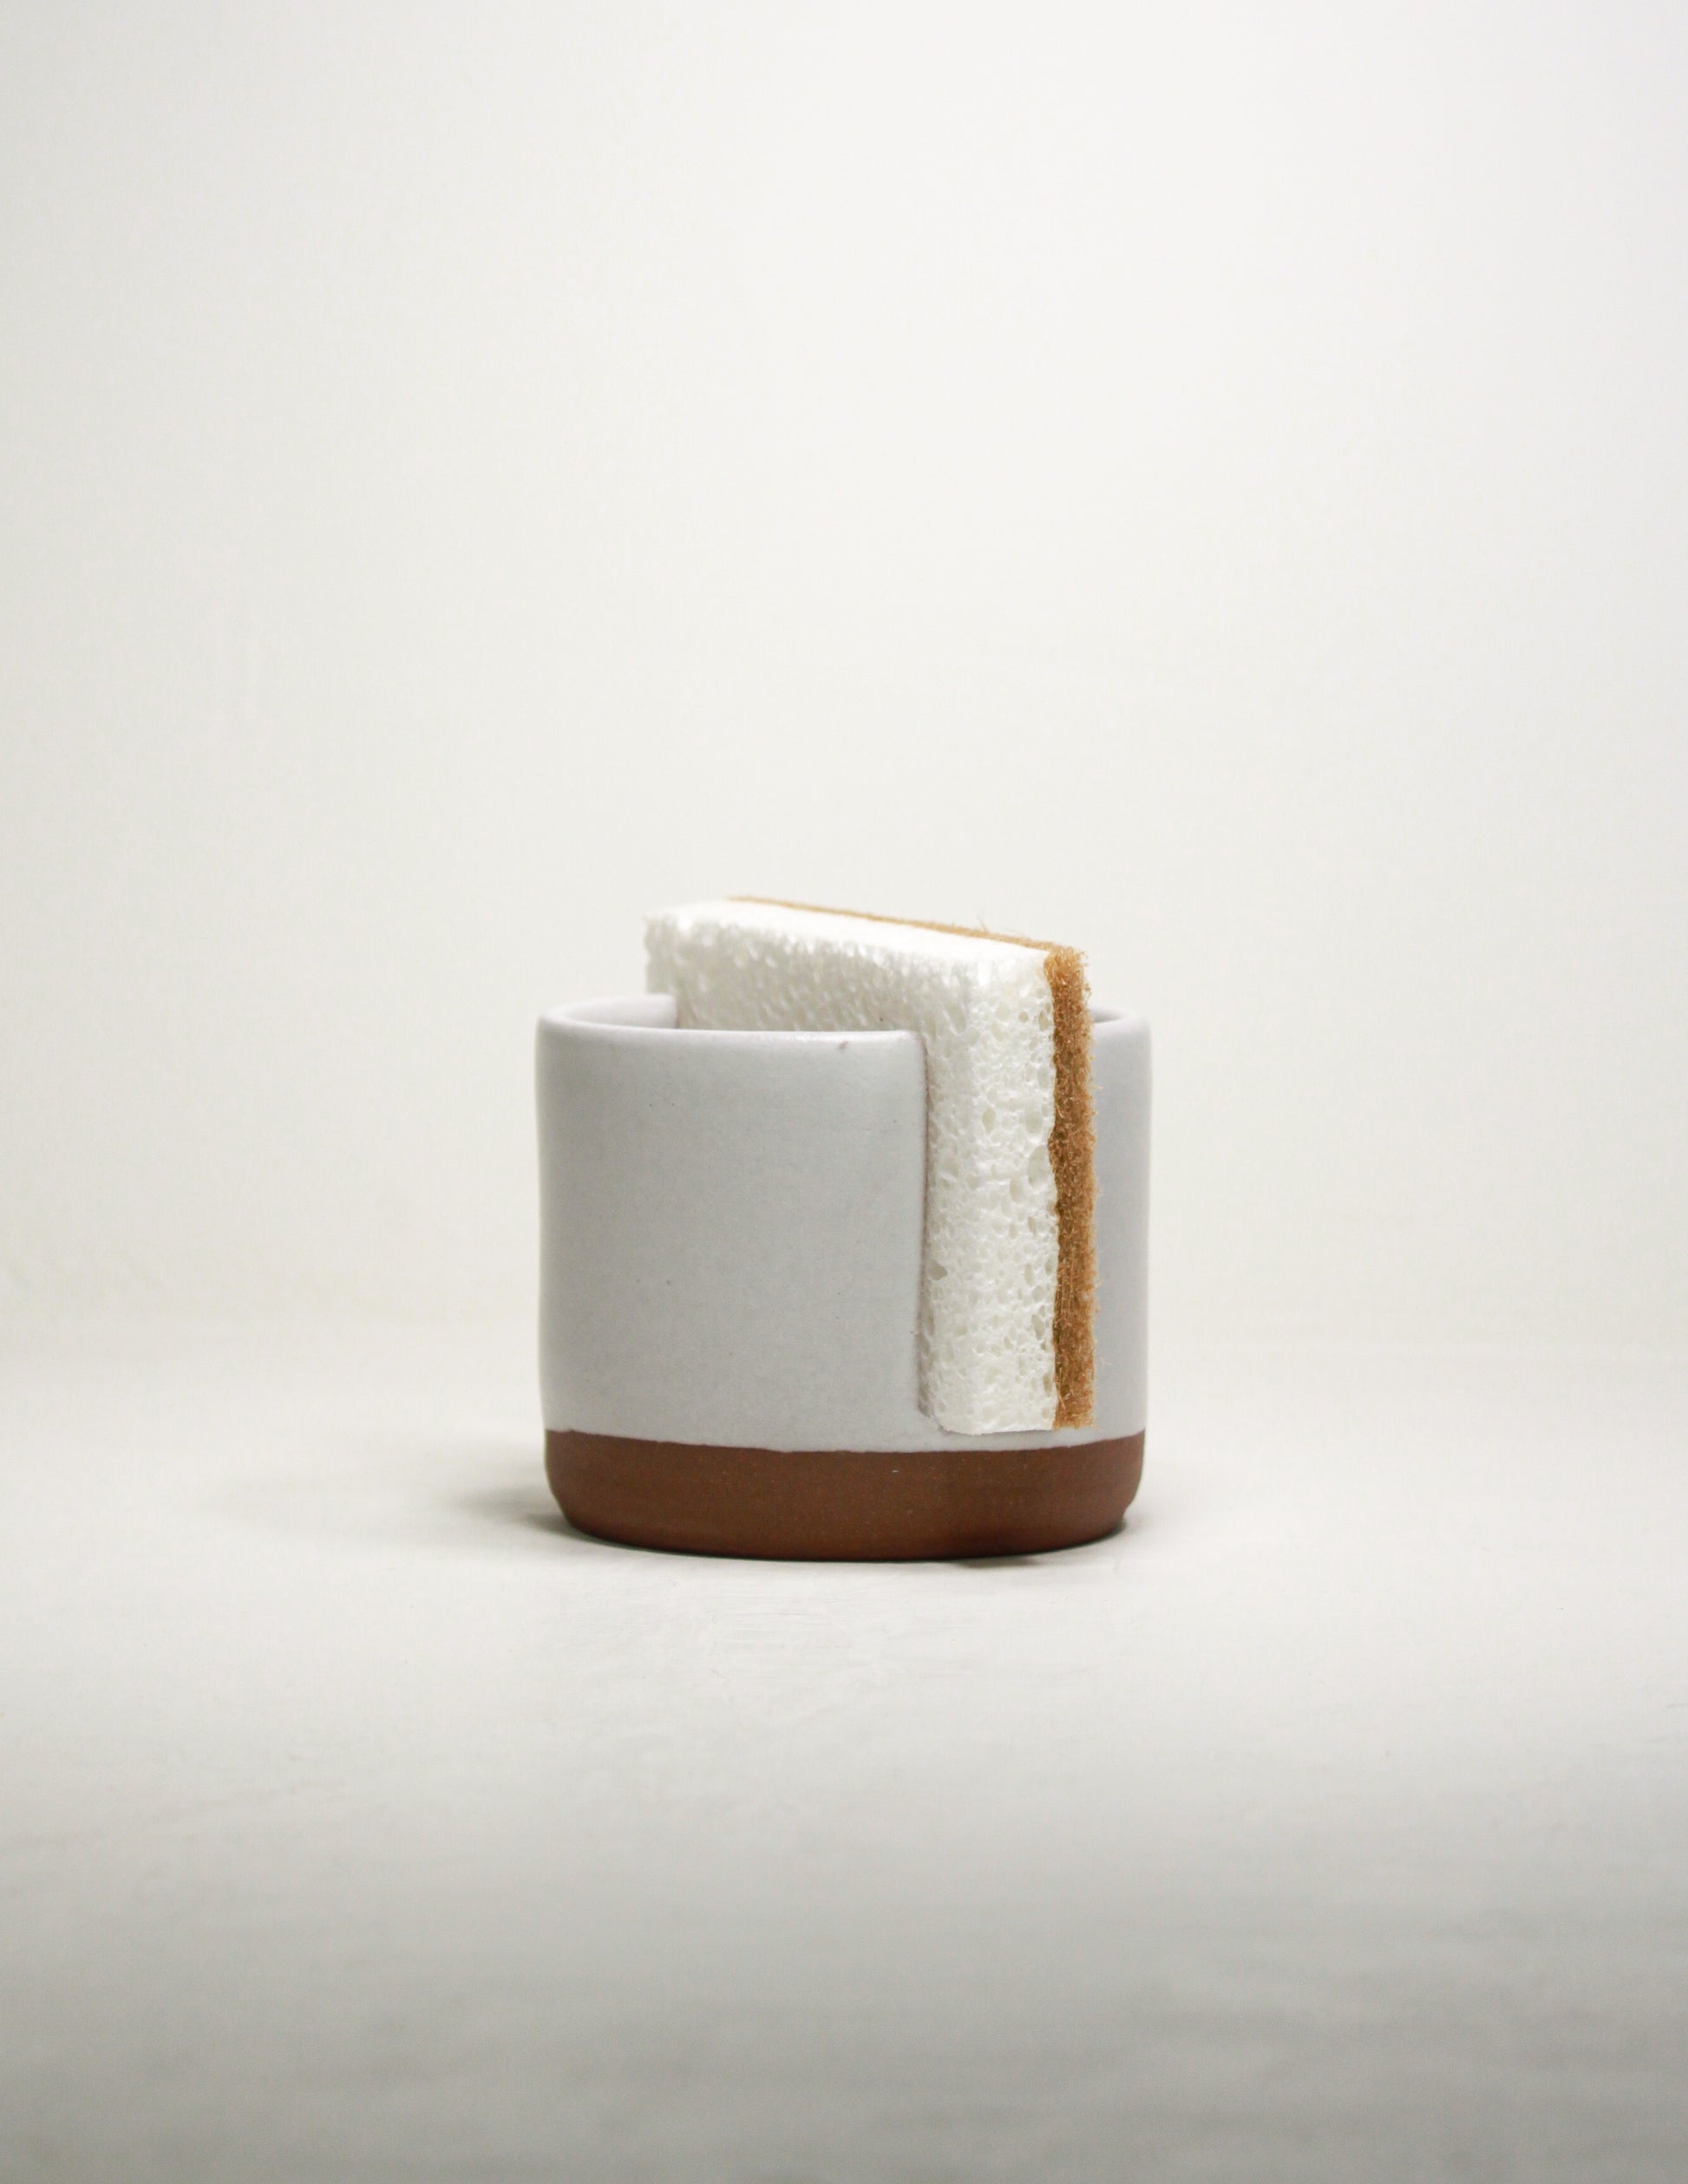 Handmade ceramic sponge holder crafted by skilled artisans at Black Oak Art